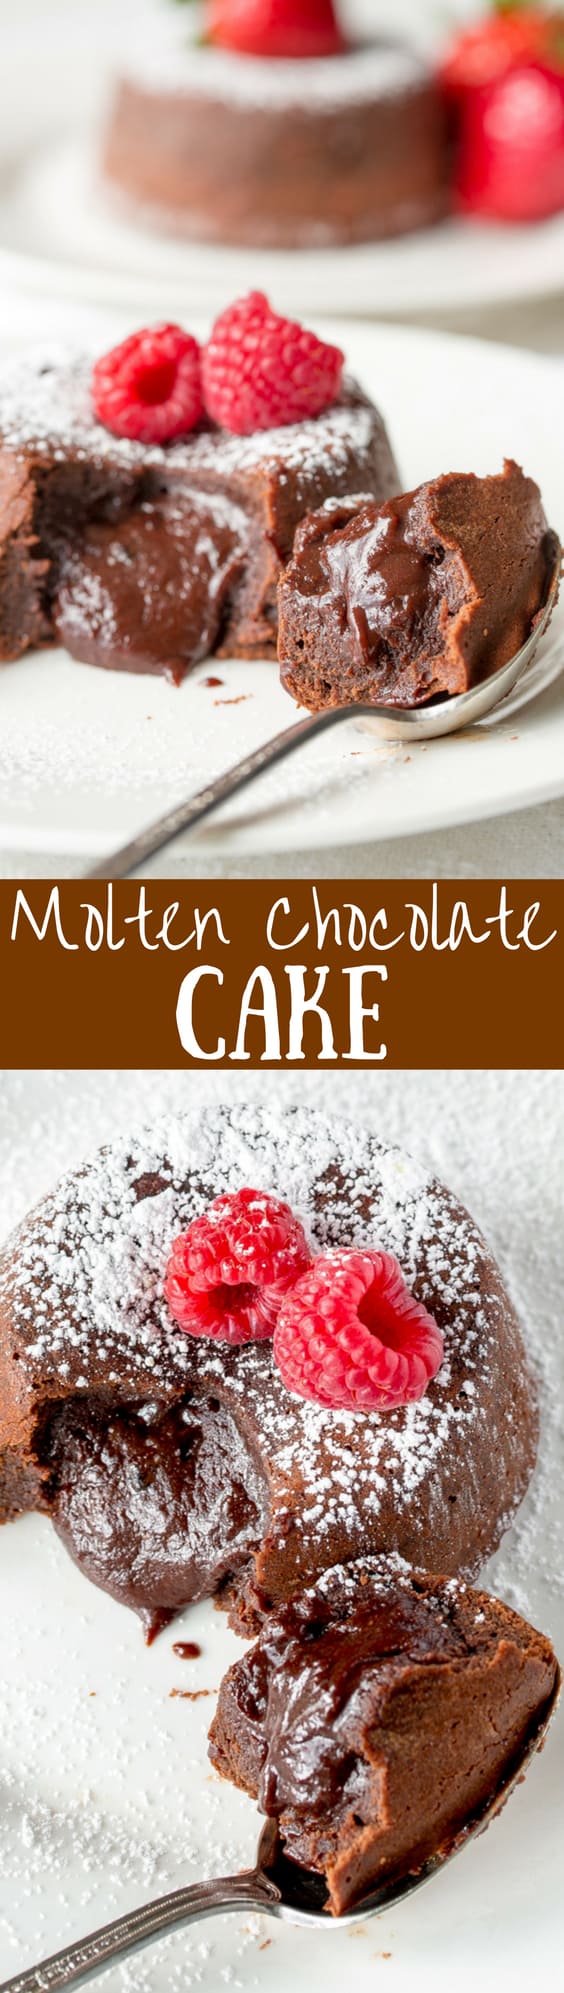 Molten Chocolate Cake -famous for it’s tender, moist cake, a light crispy crust, and gooey rich chocolate middle. www.savingdessert.com